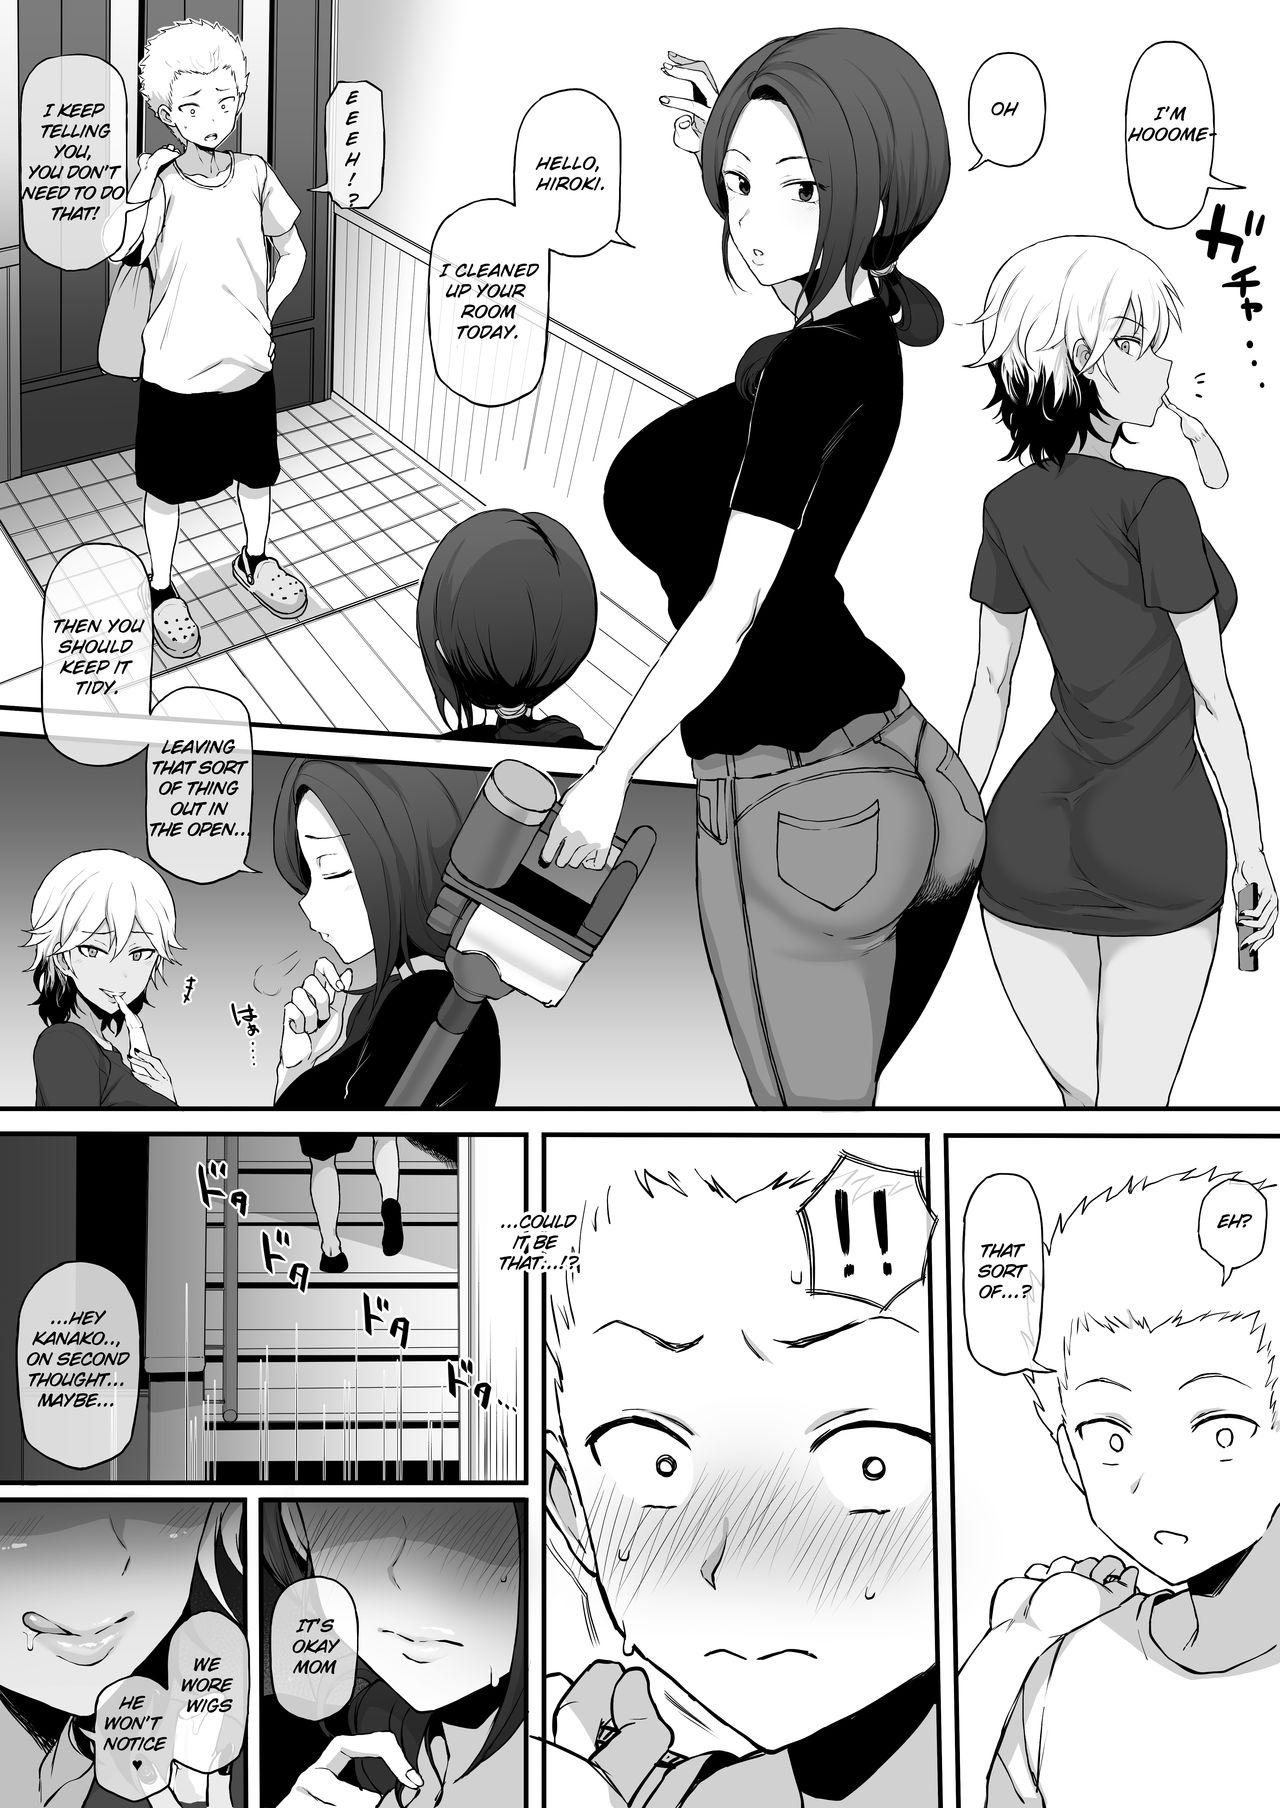 Kokujin no Tenkousei NTR ru Chapters 1-6 part 1 Plus Bonus chapter: Stolen Mother’s Breasts 26